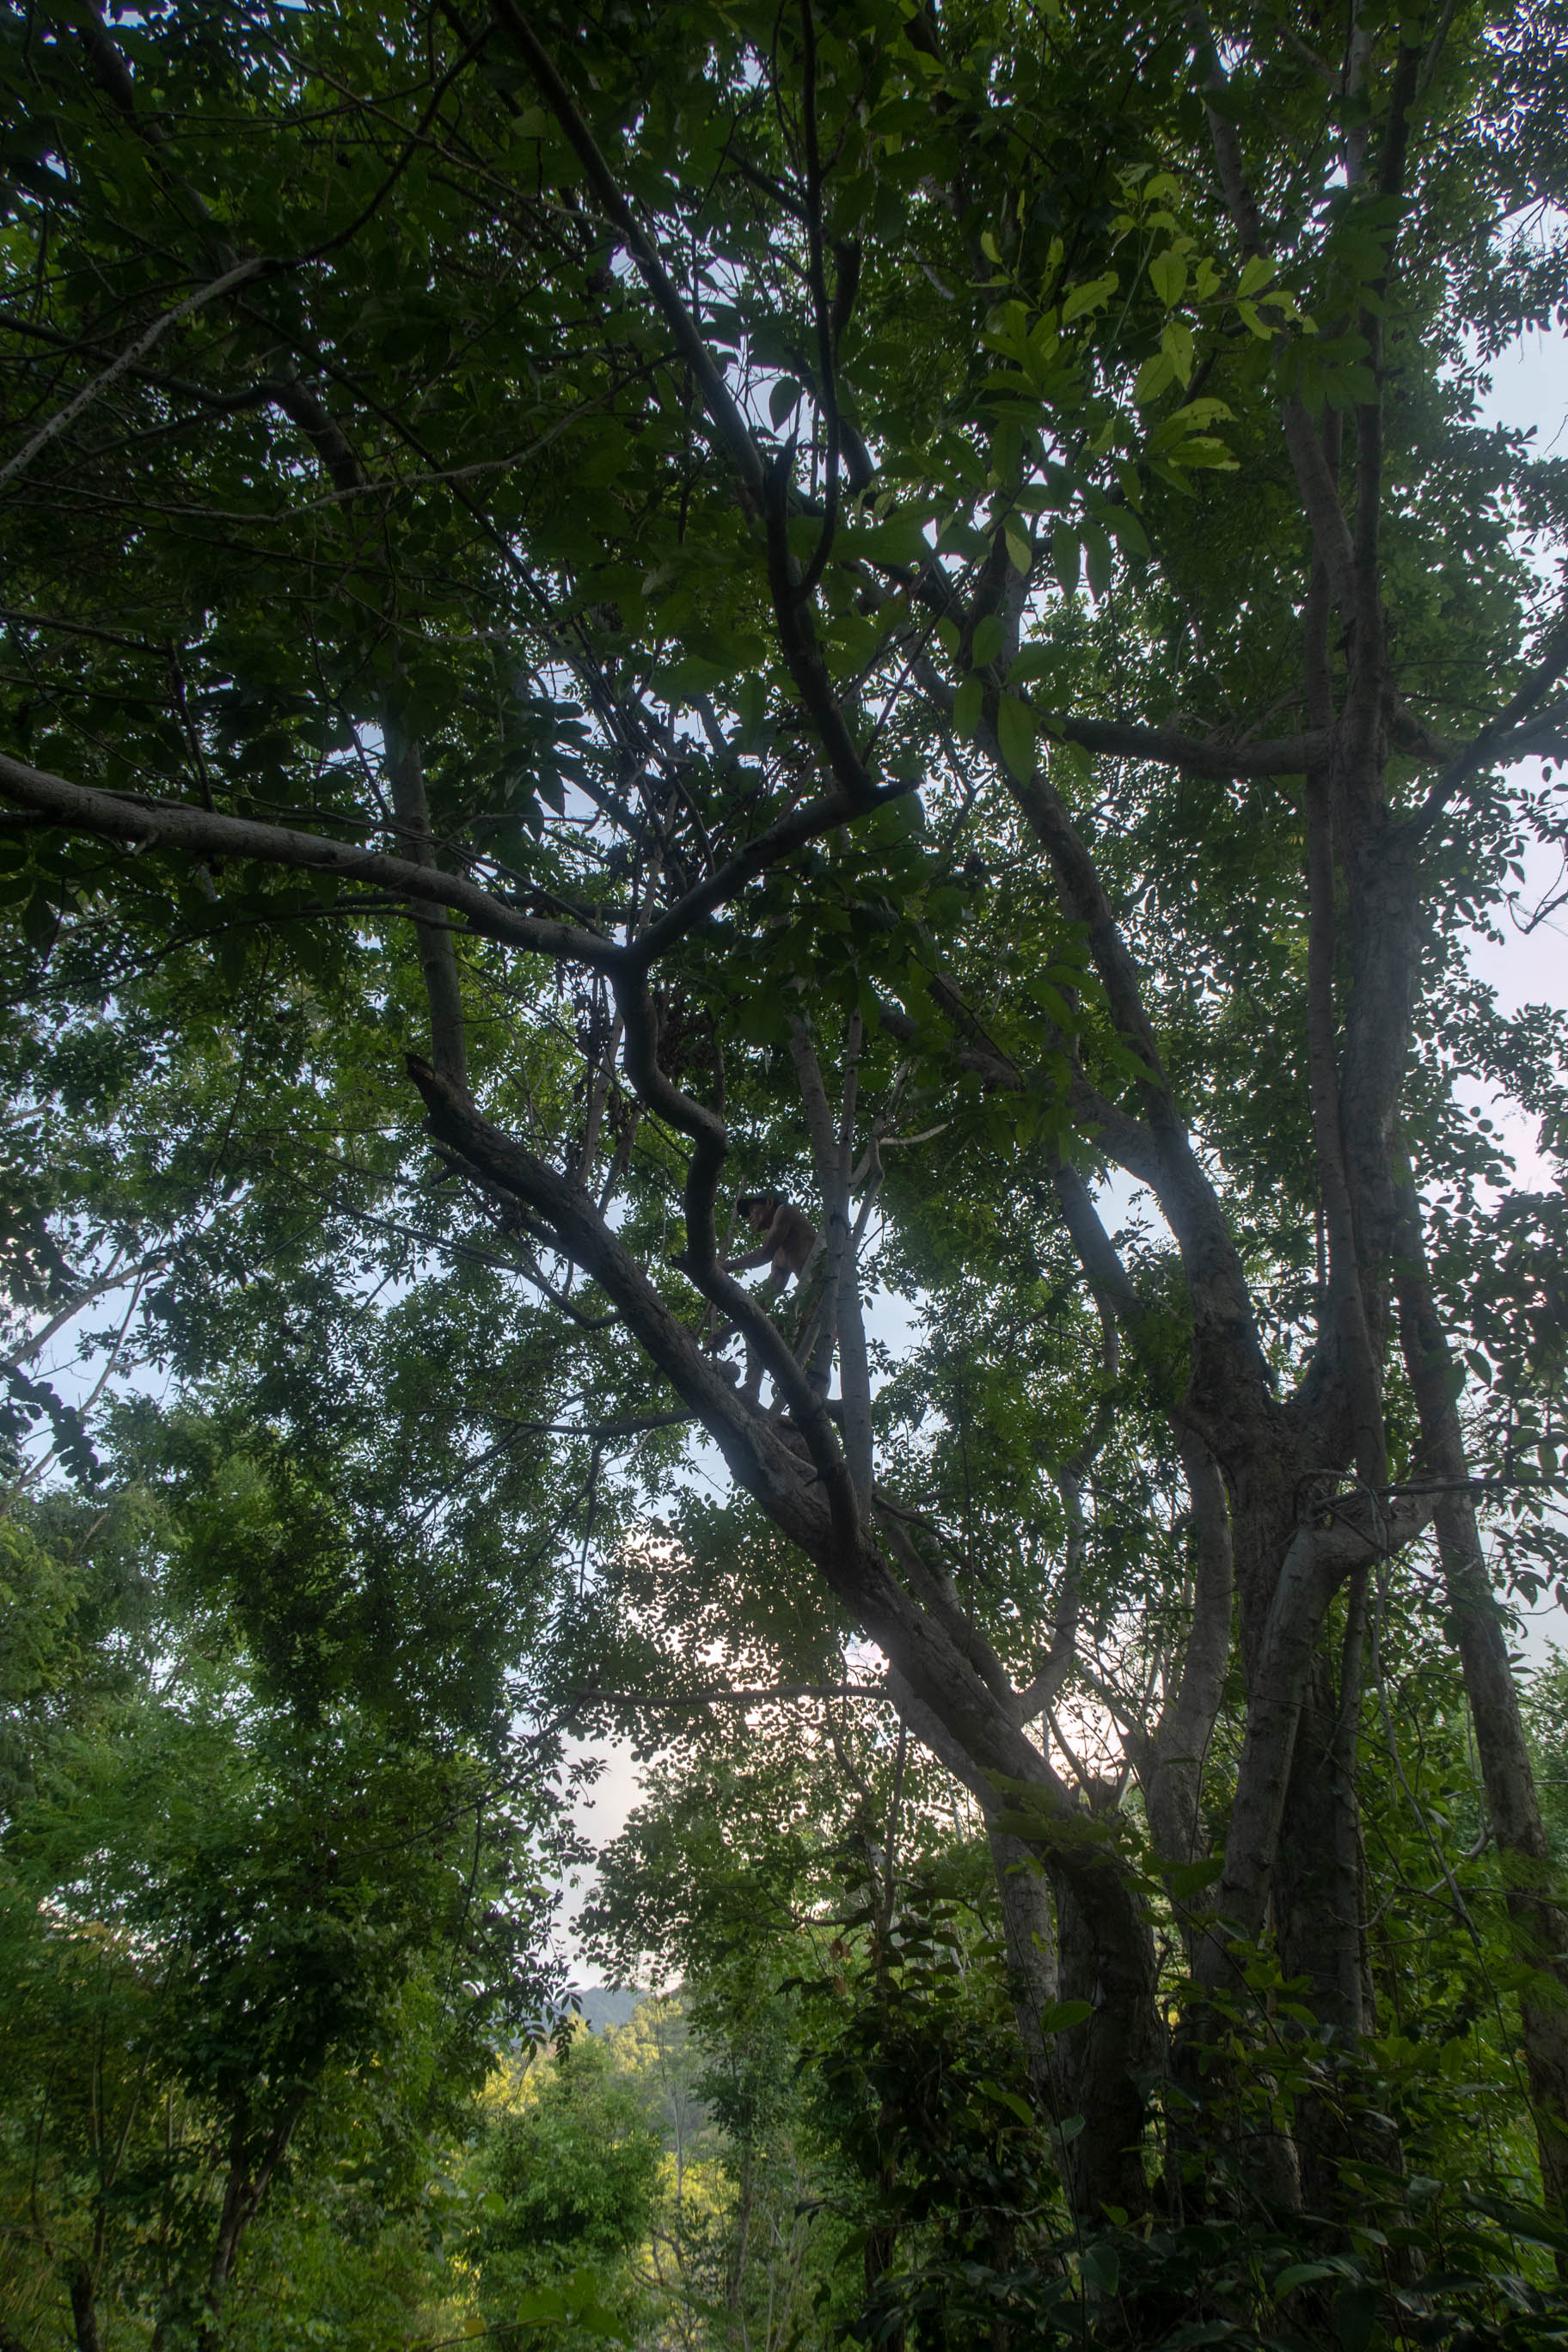 Climbing another trenggulun tree